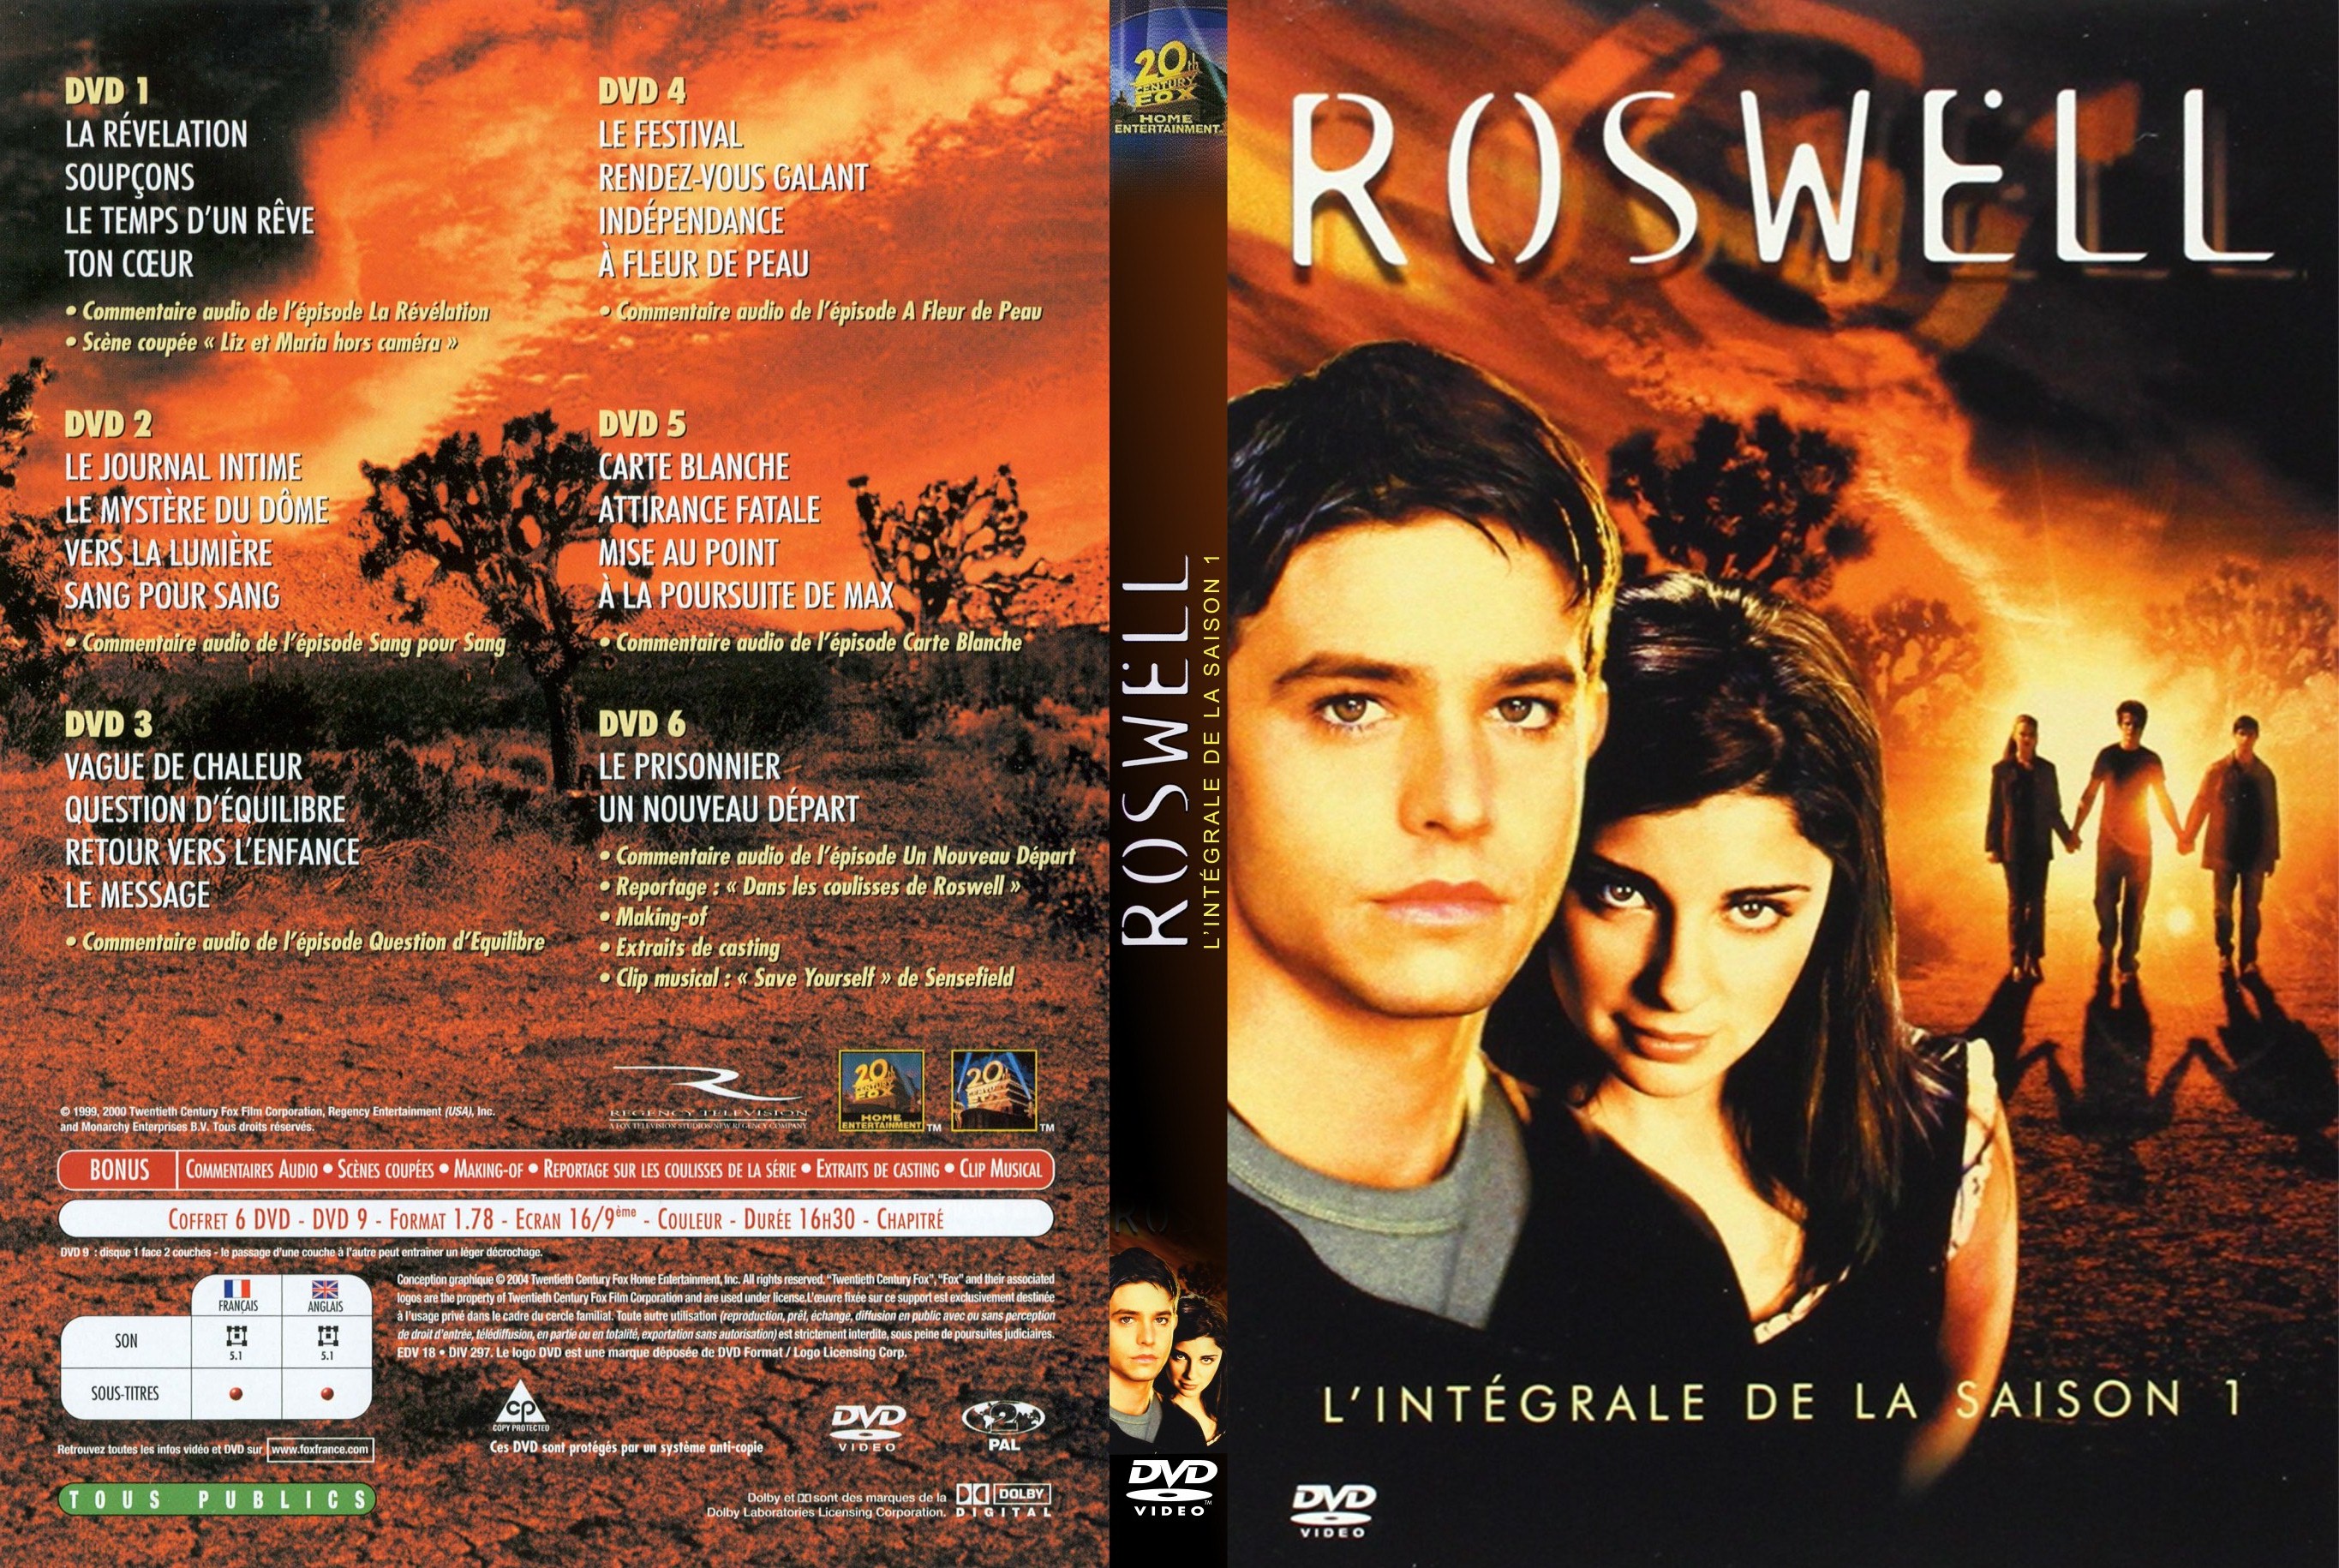 Jaquette DVD Roswell saison 1 custom